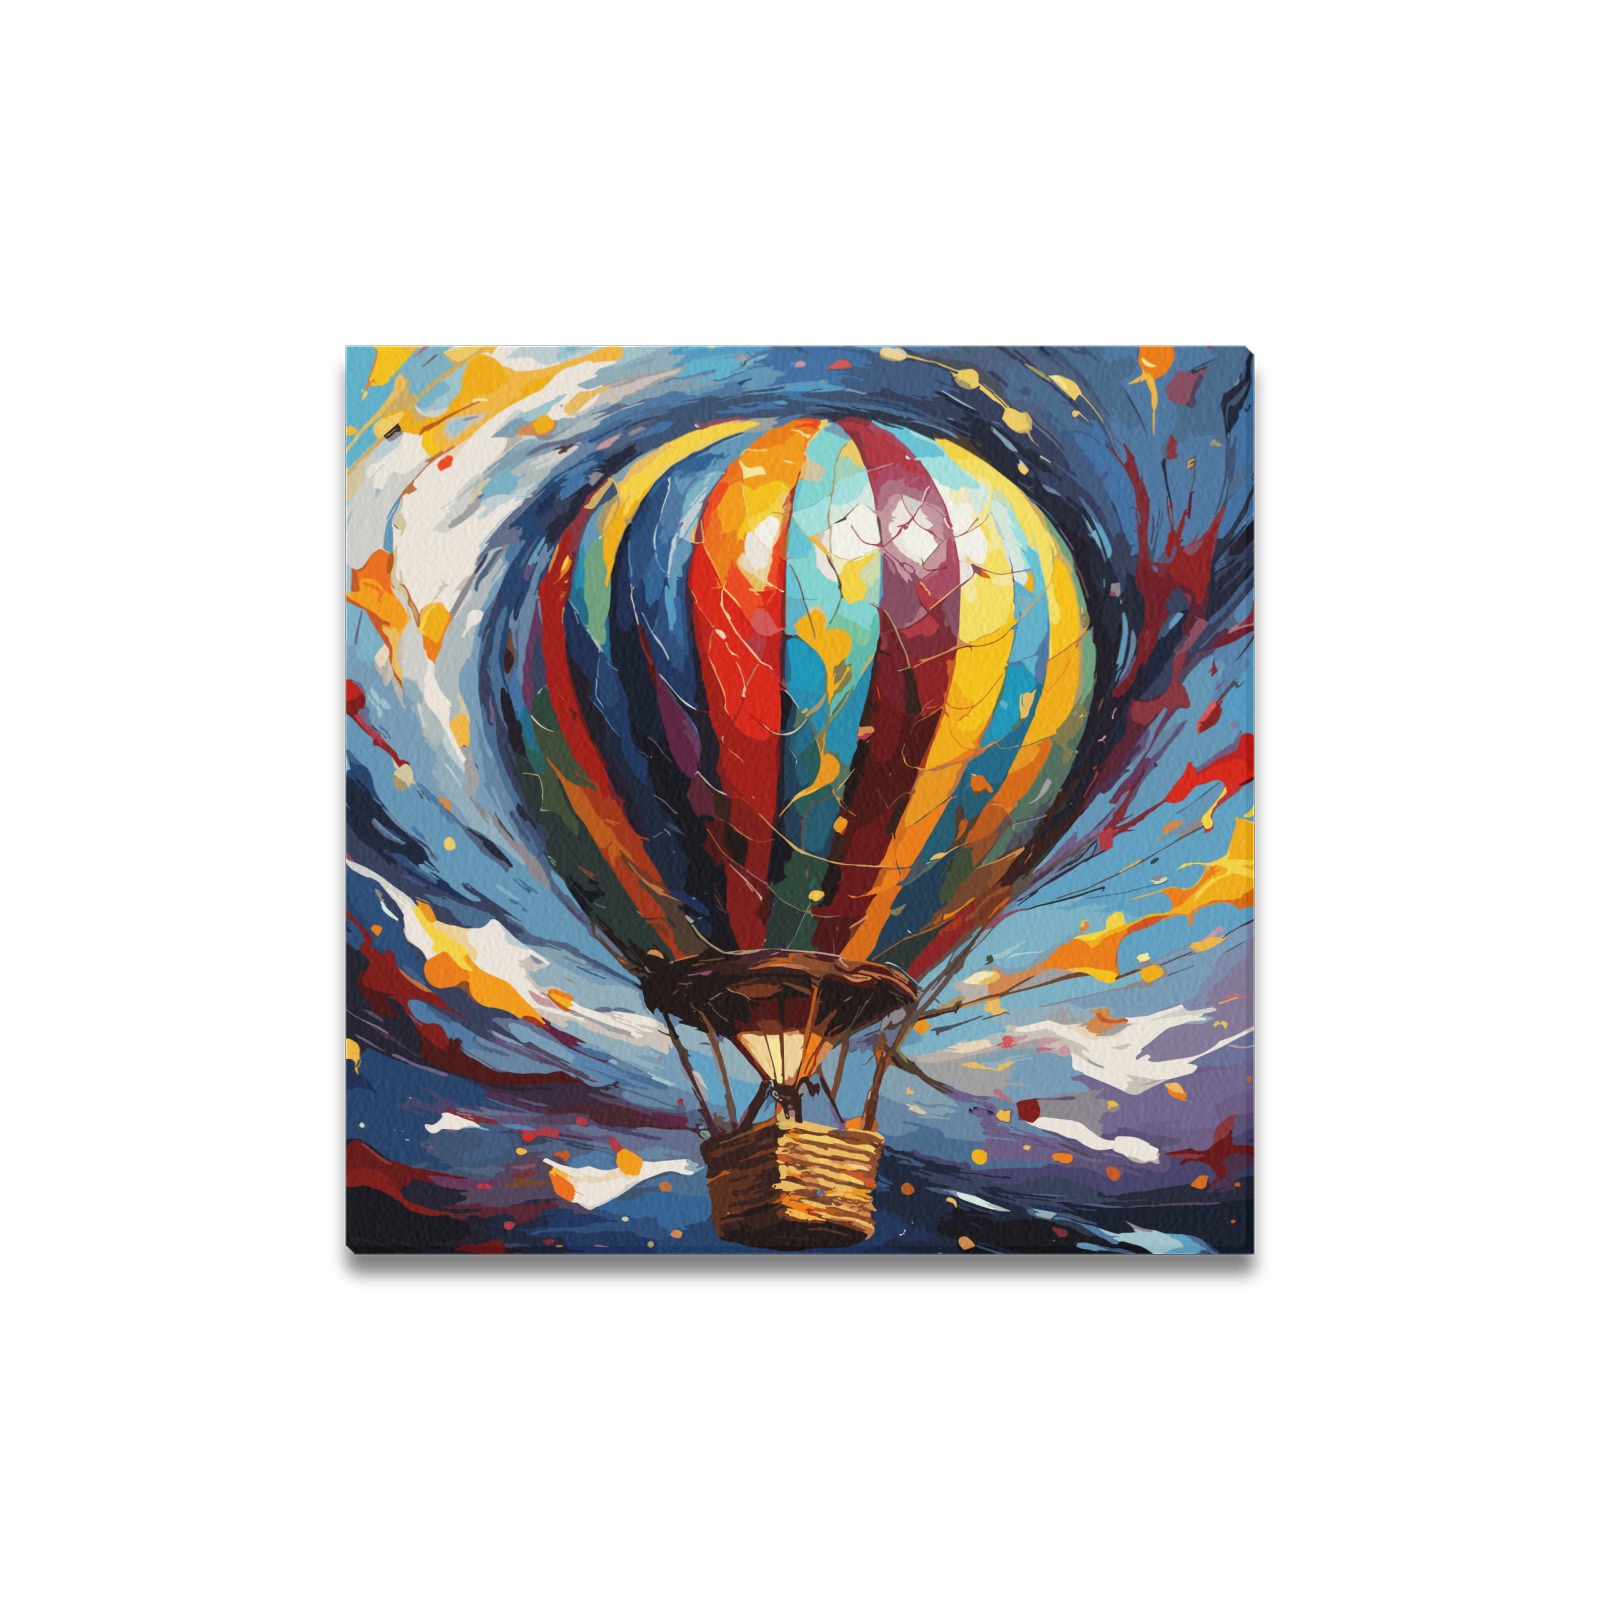 Imaginative hot air ballon beautiful colorful art. Upgraded Canvas Print 16"x16"